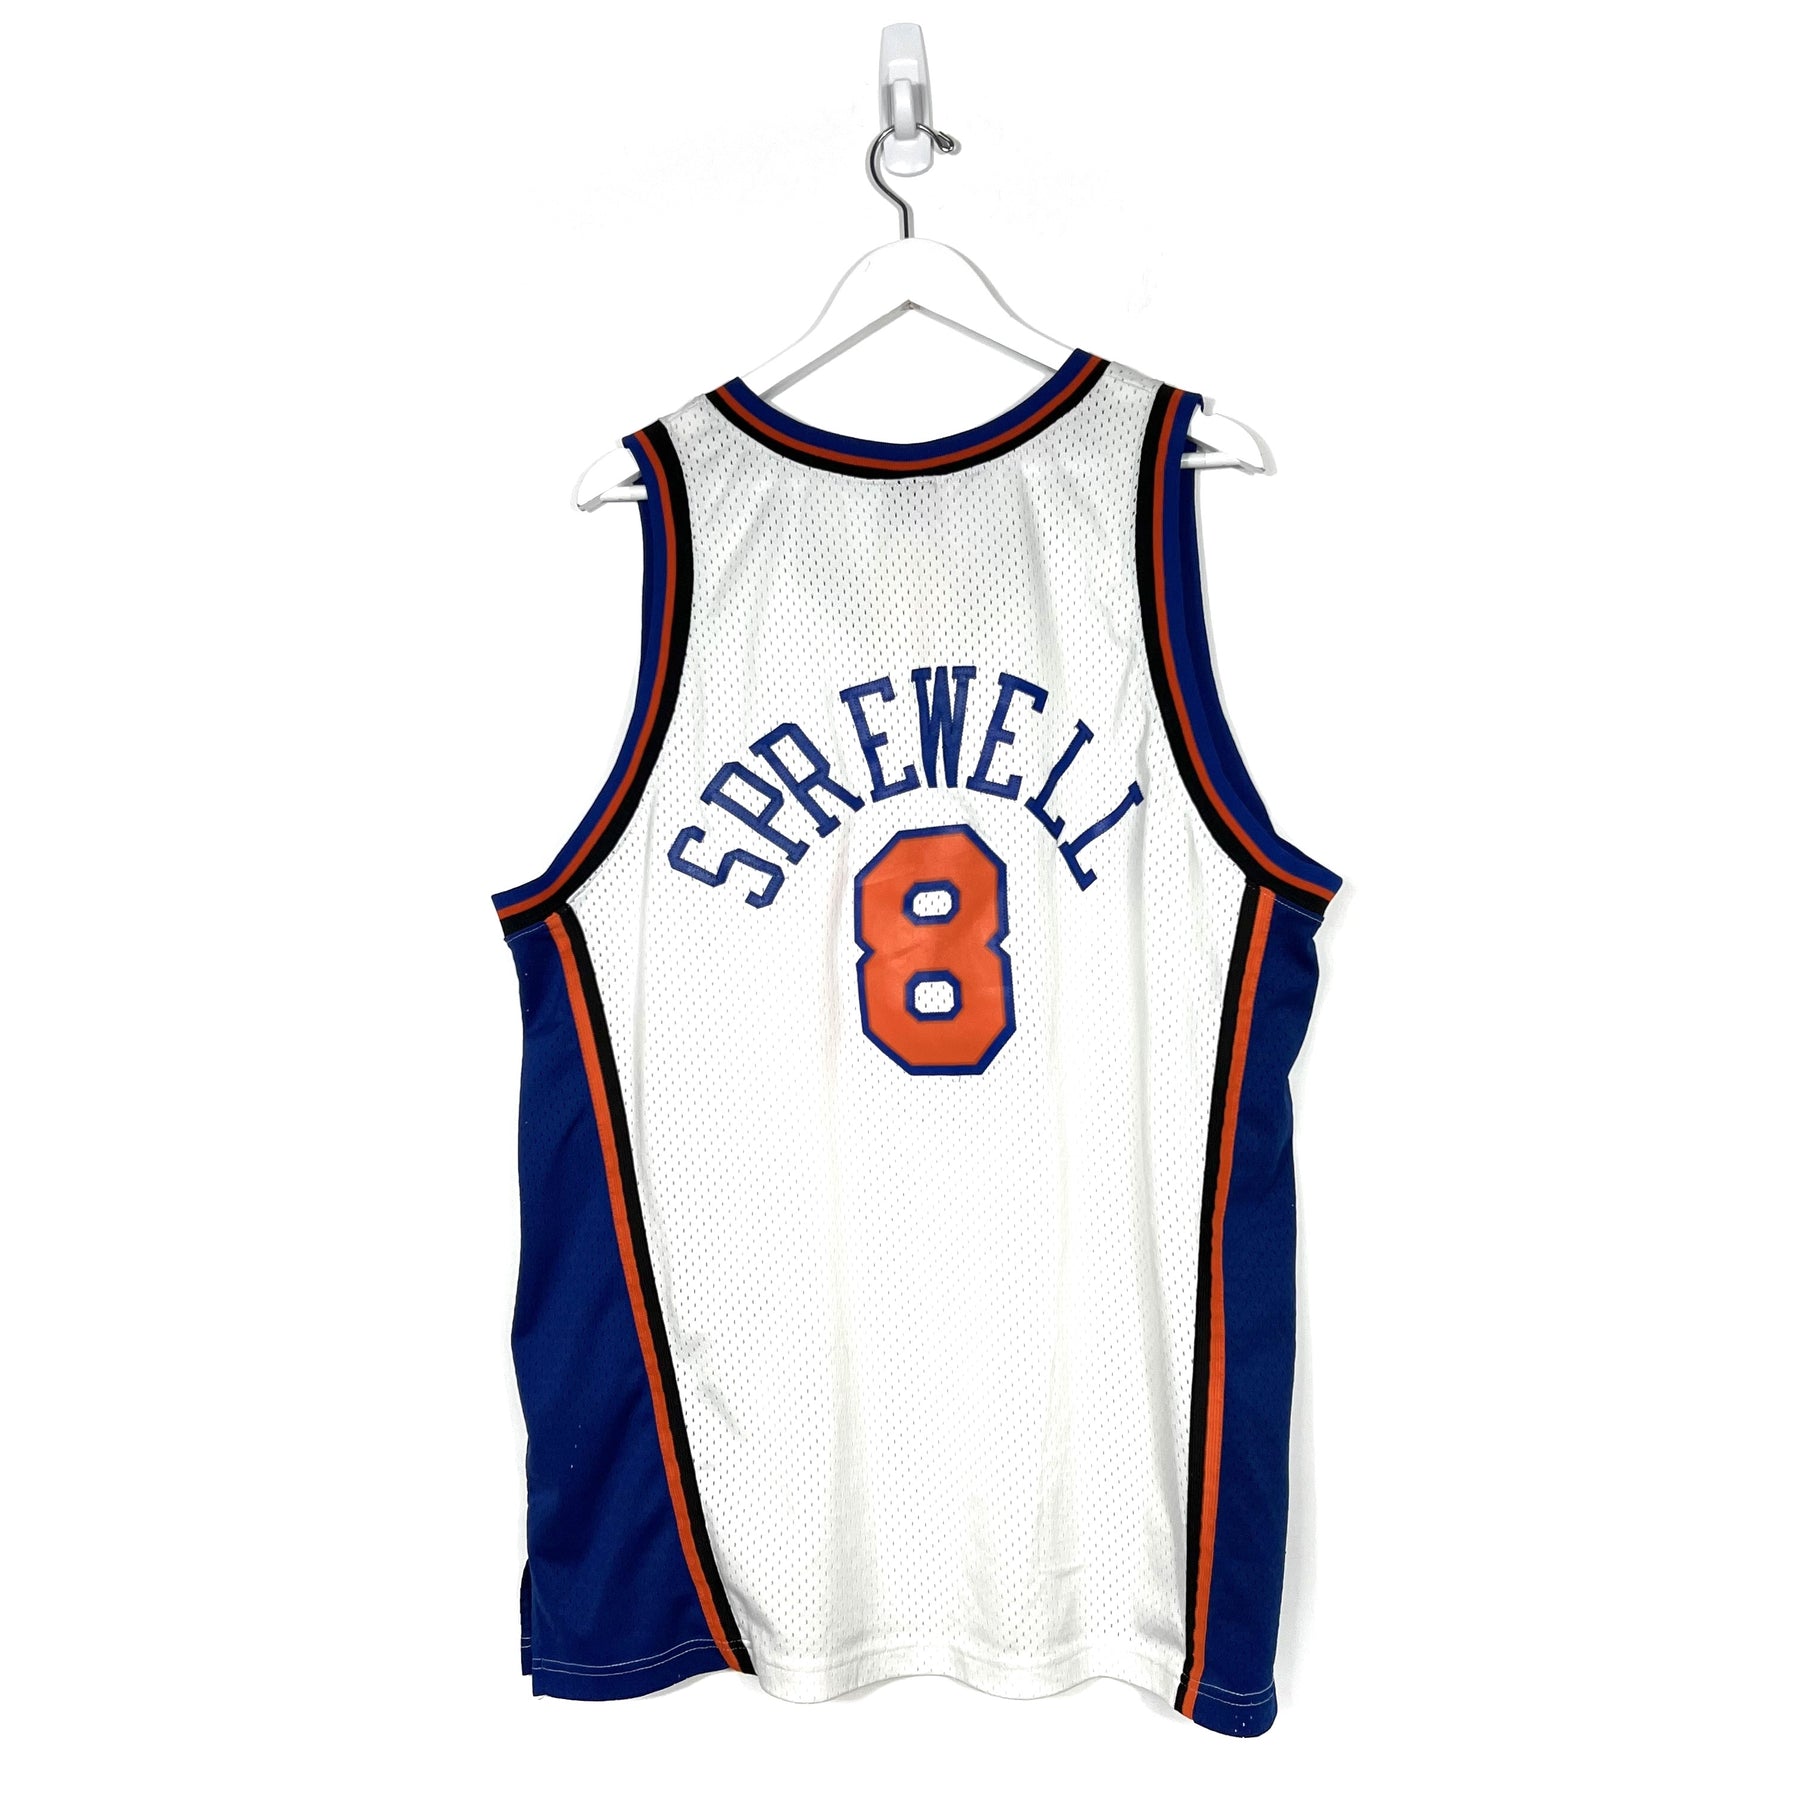 Vintage Champion New York Knicks Latrell Sprewell Jersey Size 52